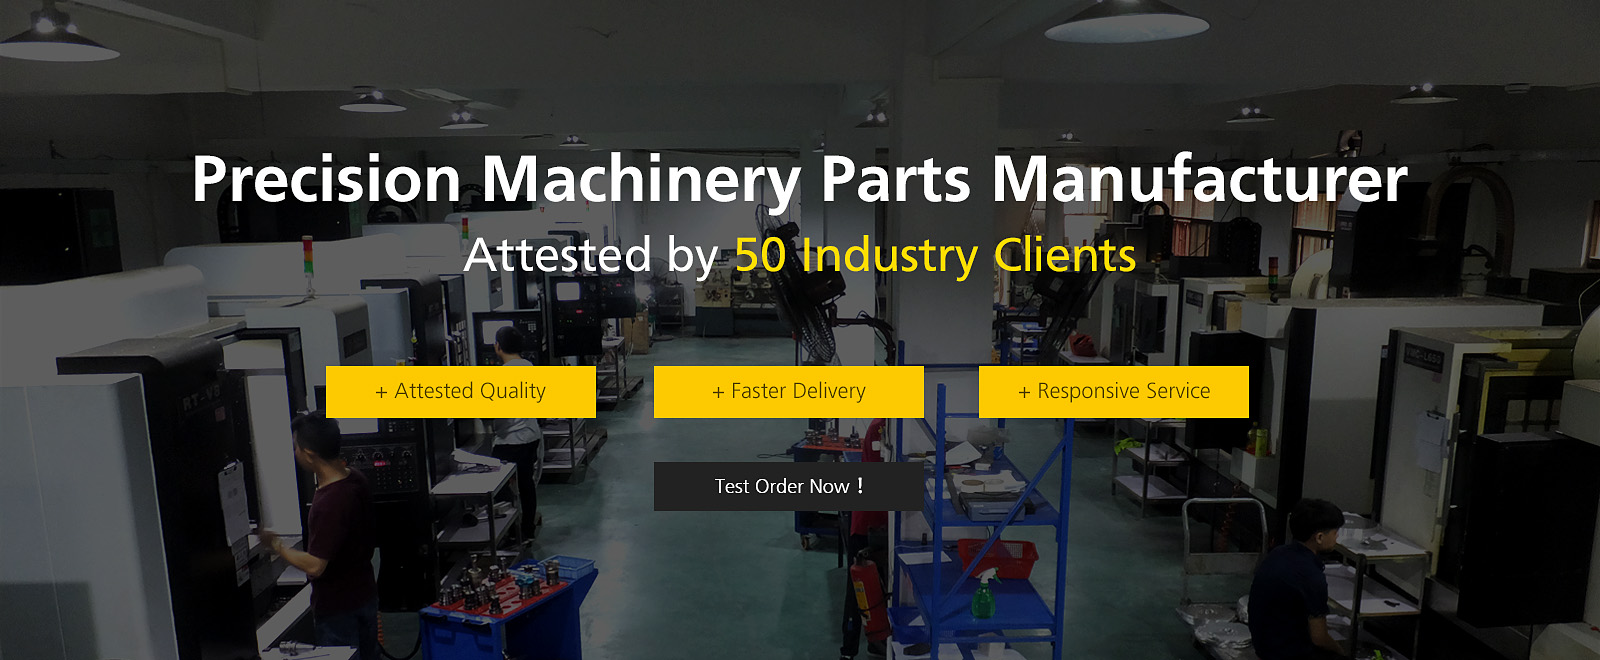 Precision Machinery Parts Manufacturer